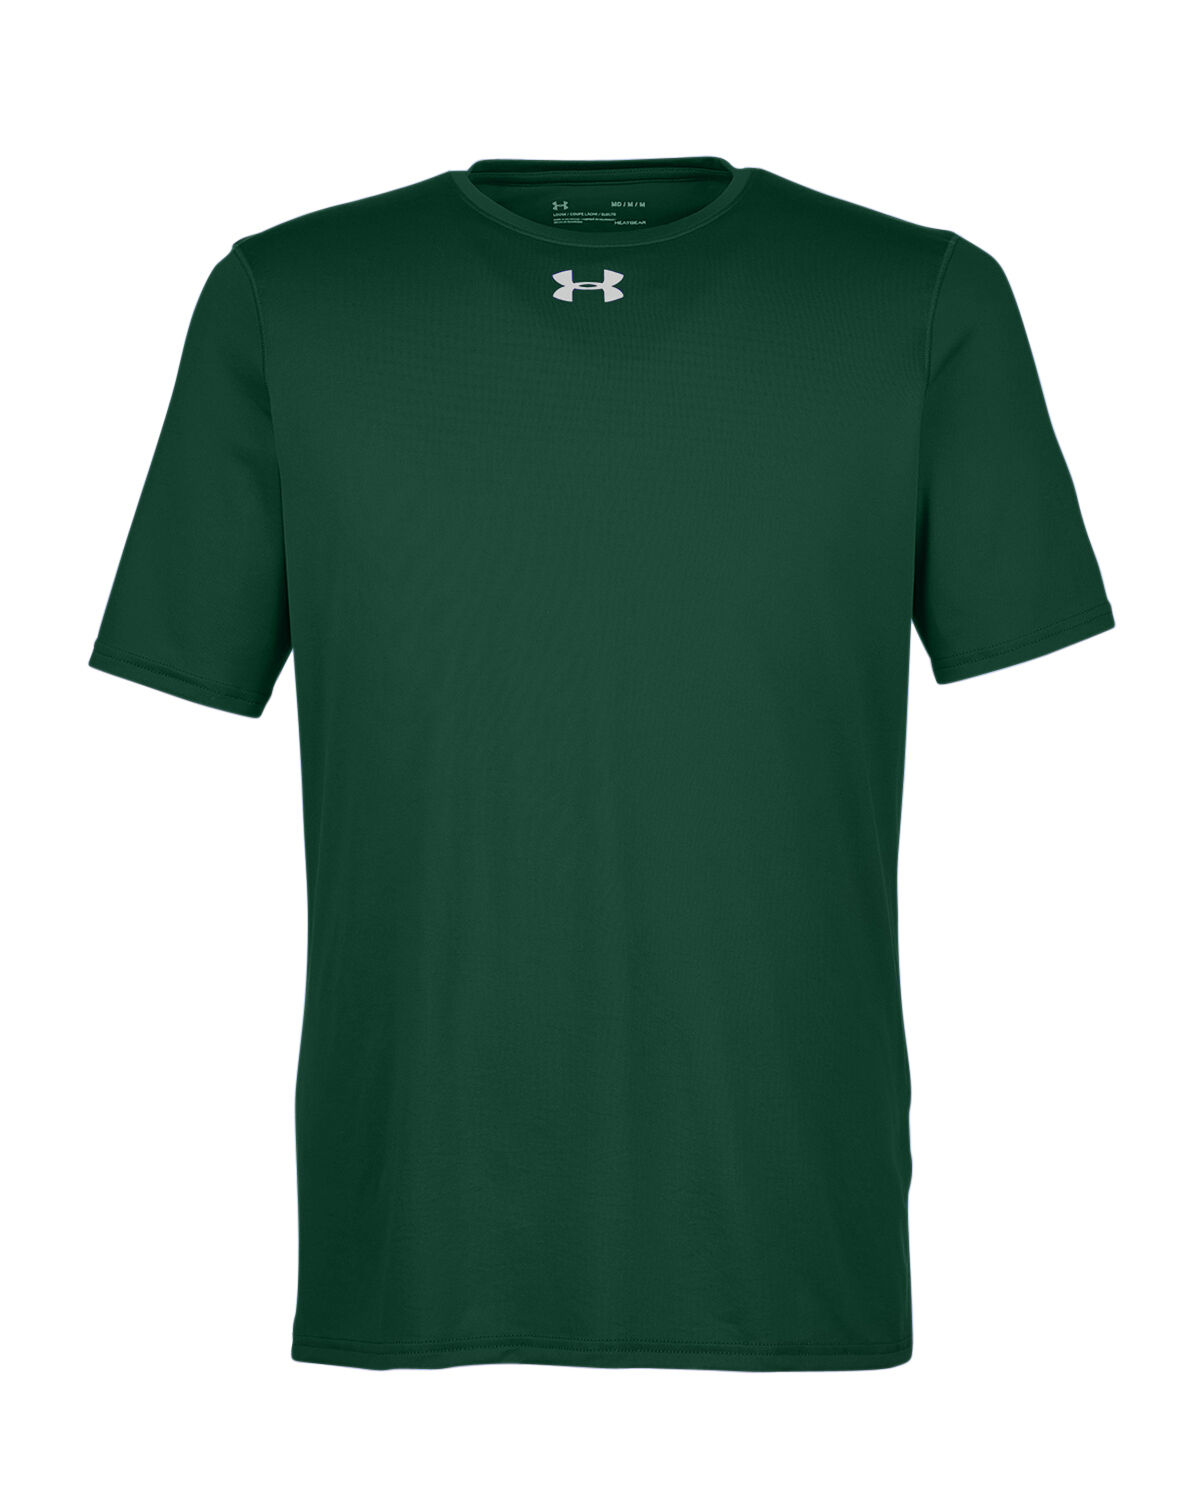 Branded Under Armour Men’s Locker T-Shirt 2.0 Forest Green/Metallic Silver